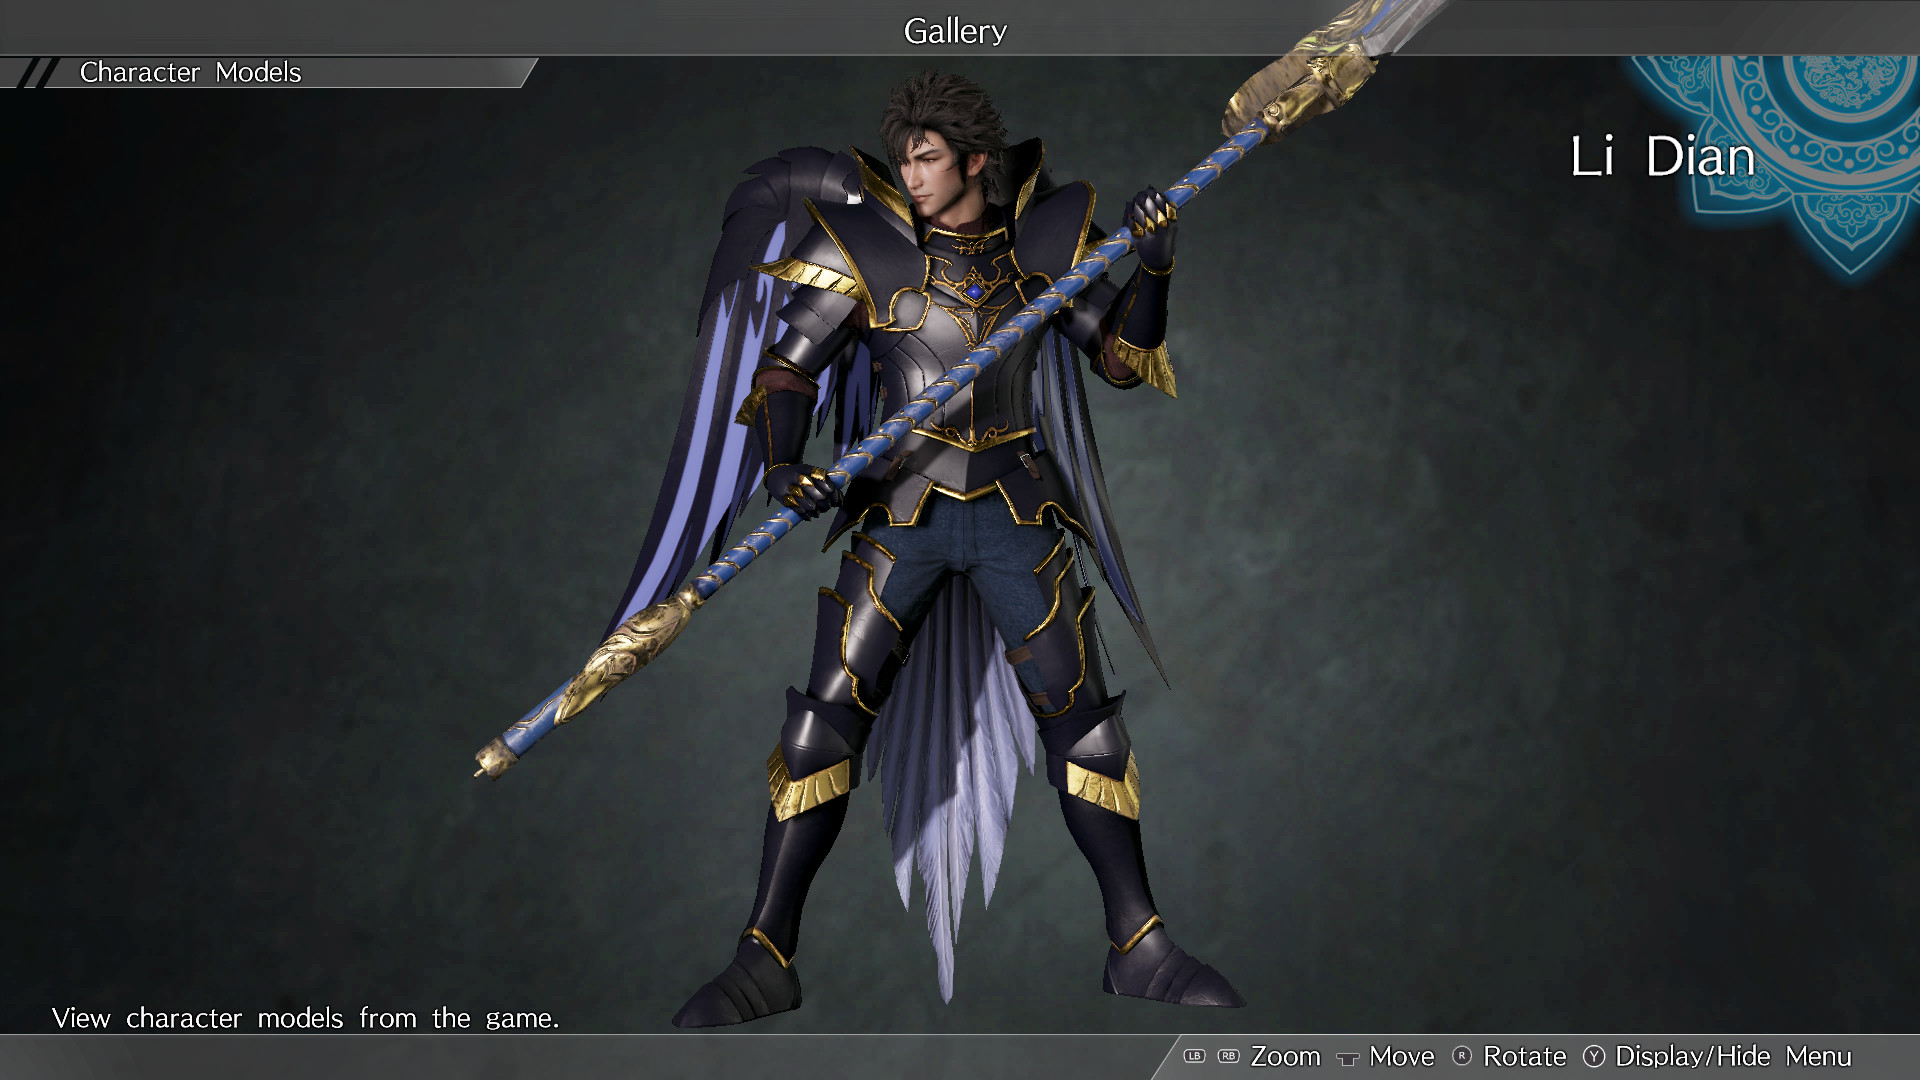 DYNASTY WARRIORS 9: Li Dian "Knight Costume" / 李典「騎士風コスチューム」 Featured Screenshot #1